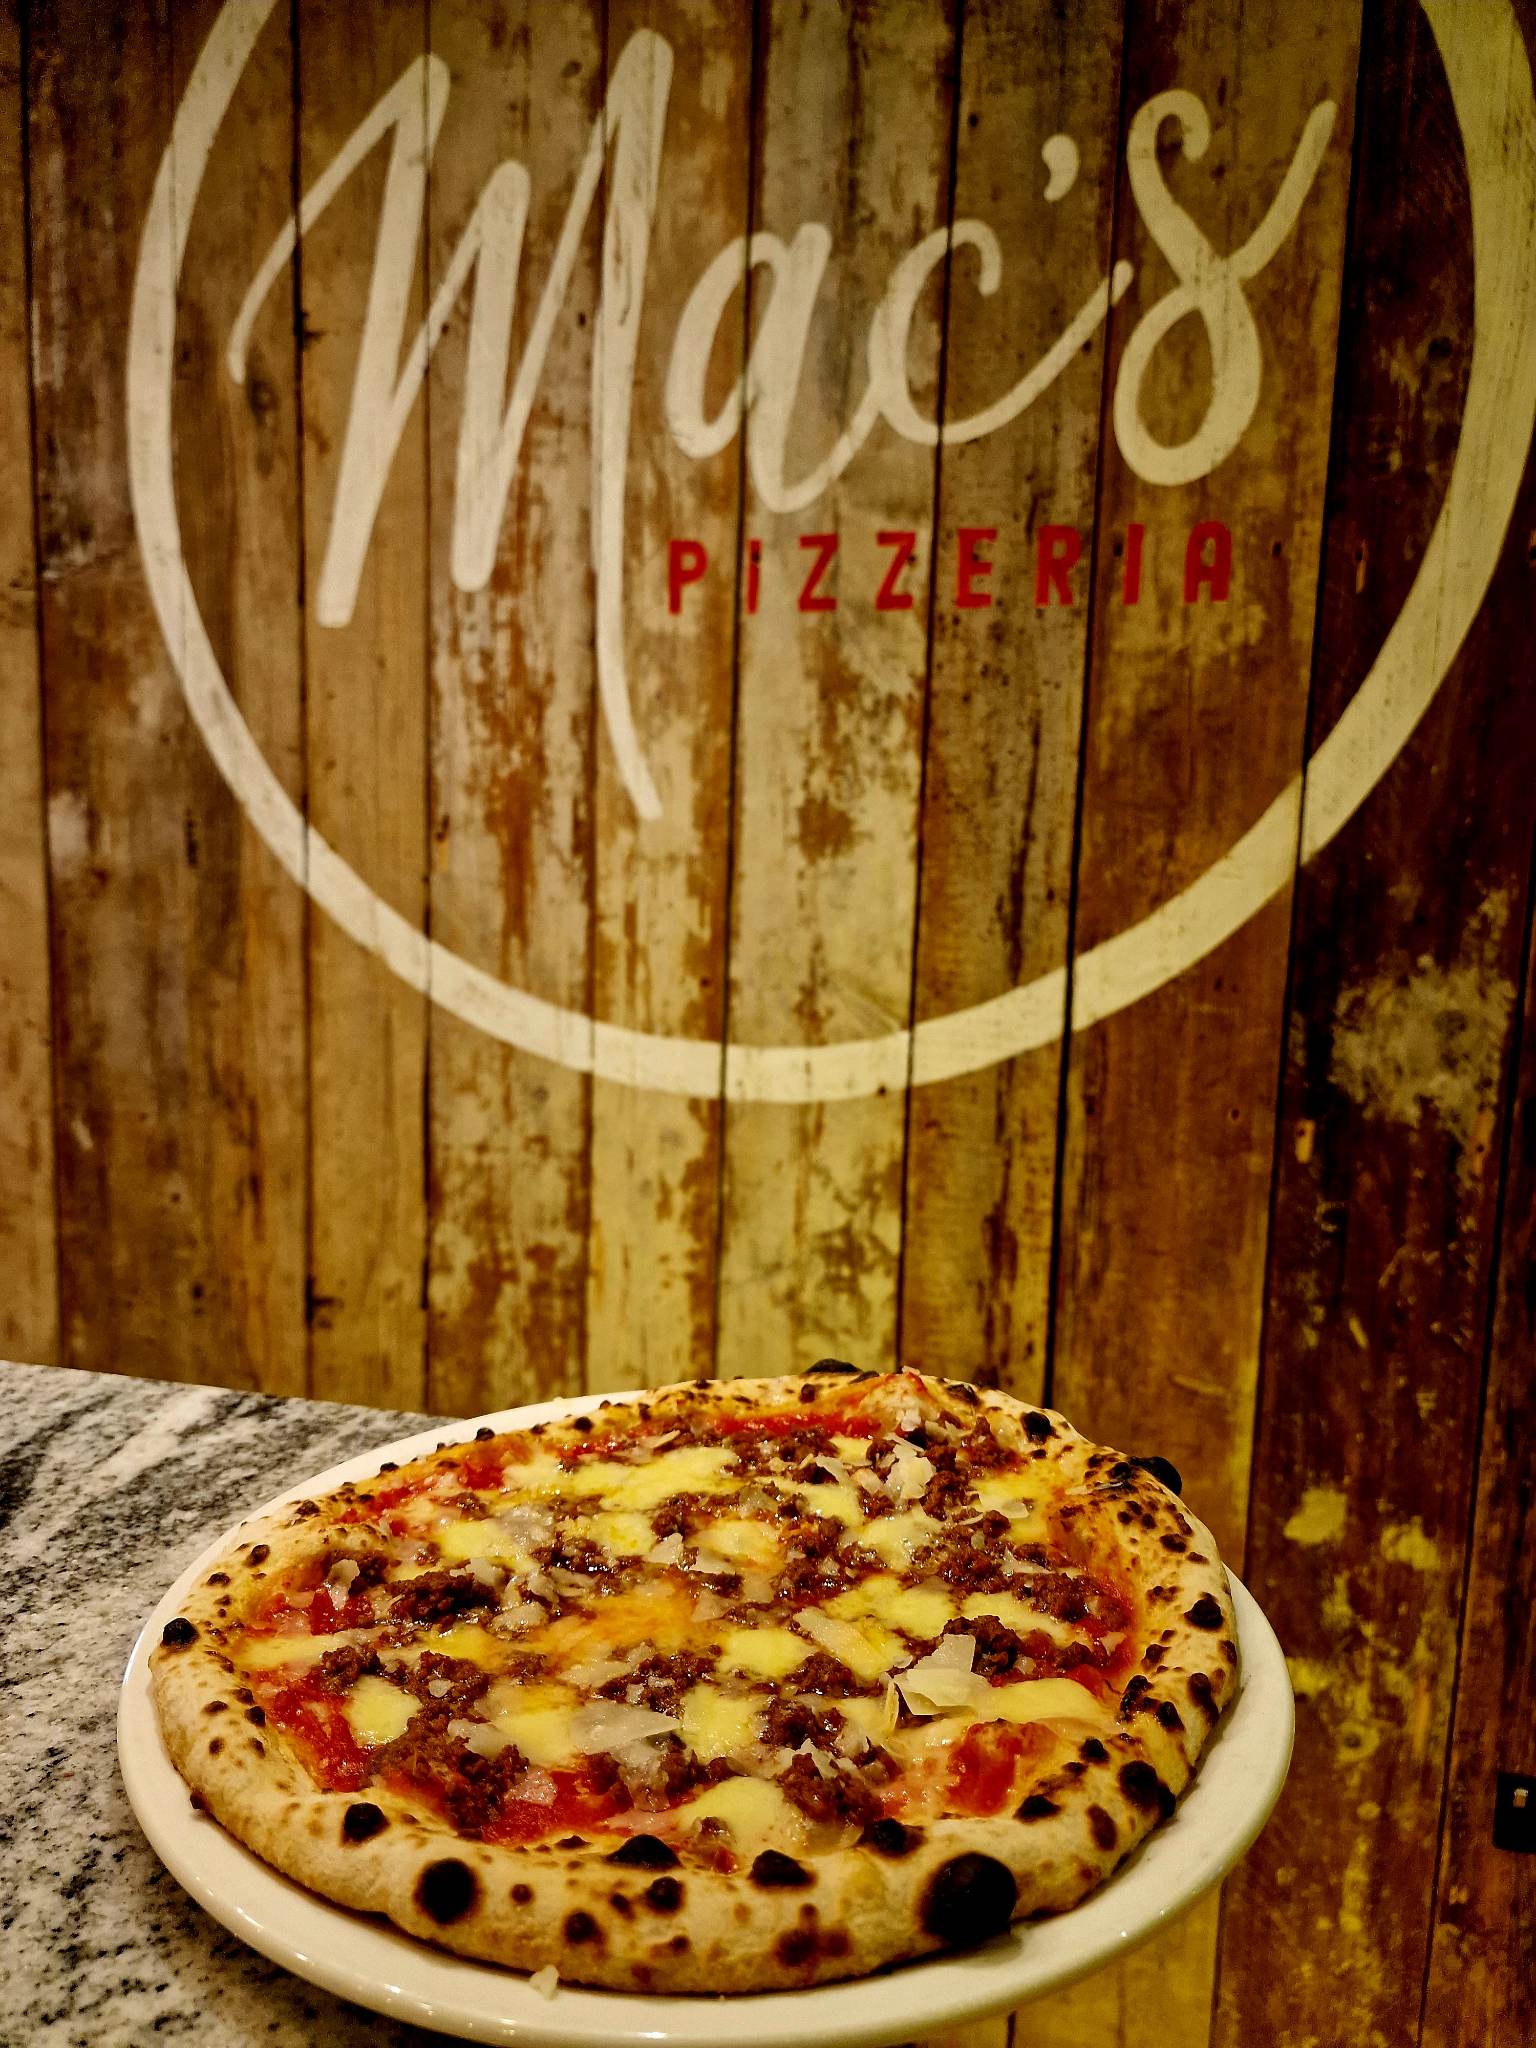 Mac's Pizzeria